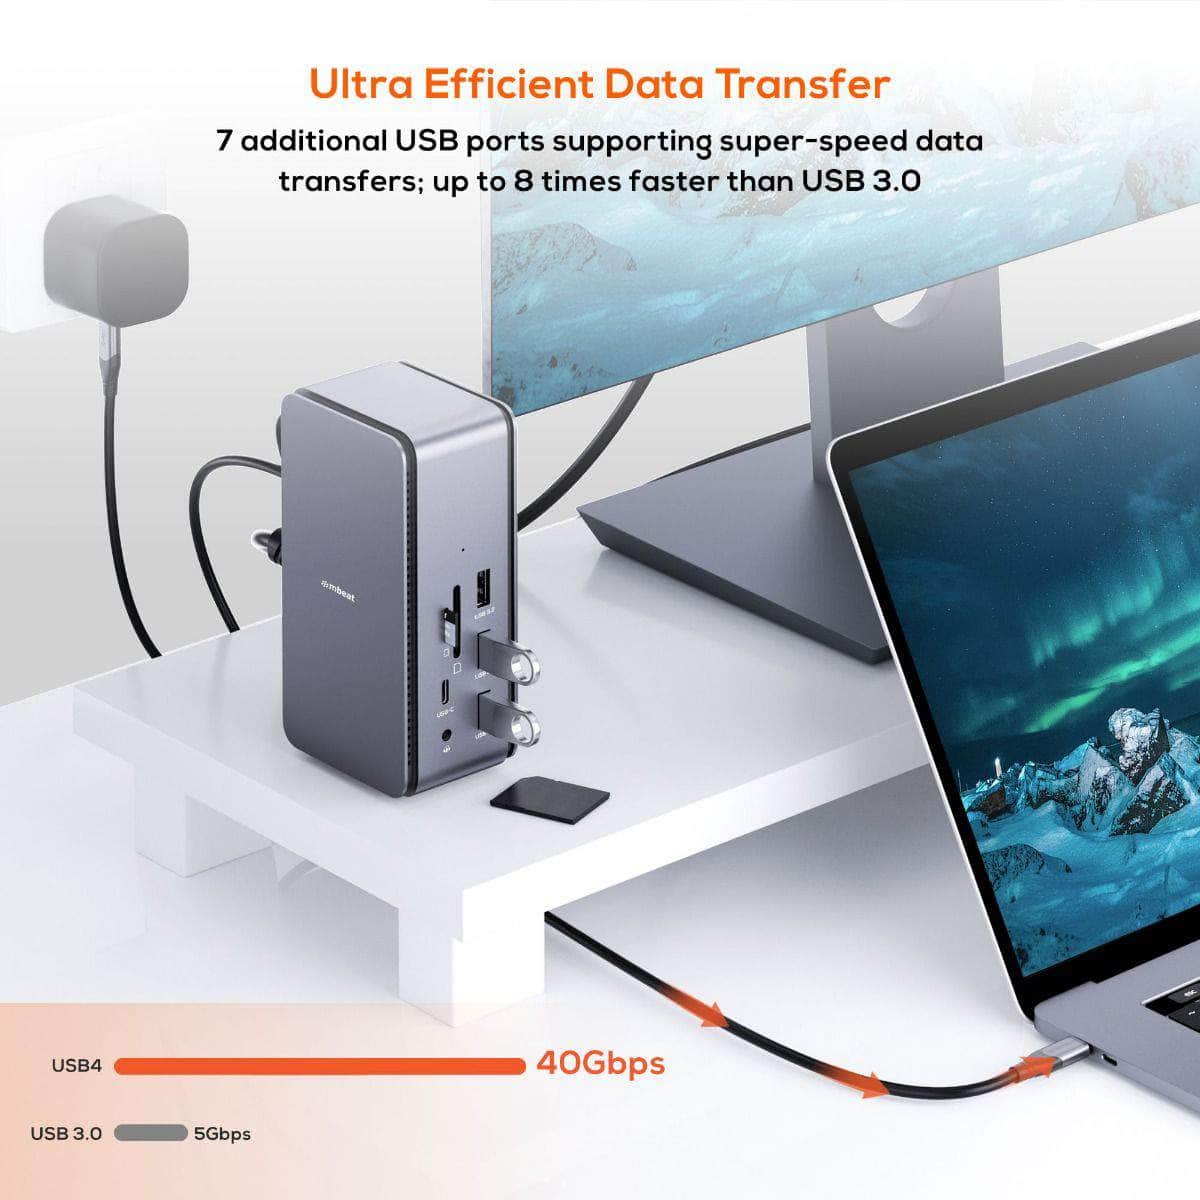 Versatile 14-in-1 USB4 Docking Station for 8K Video and Lightning-Fast 40Gbps Data